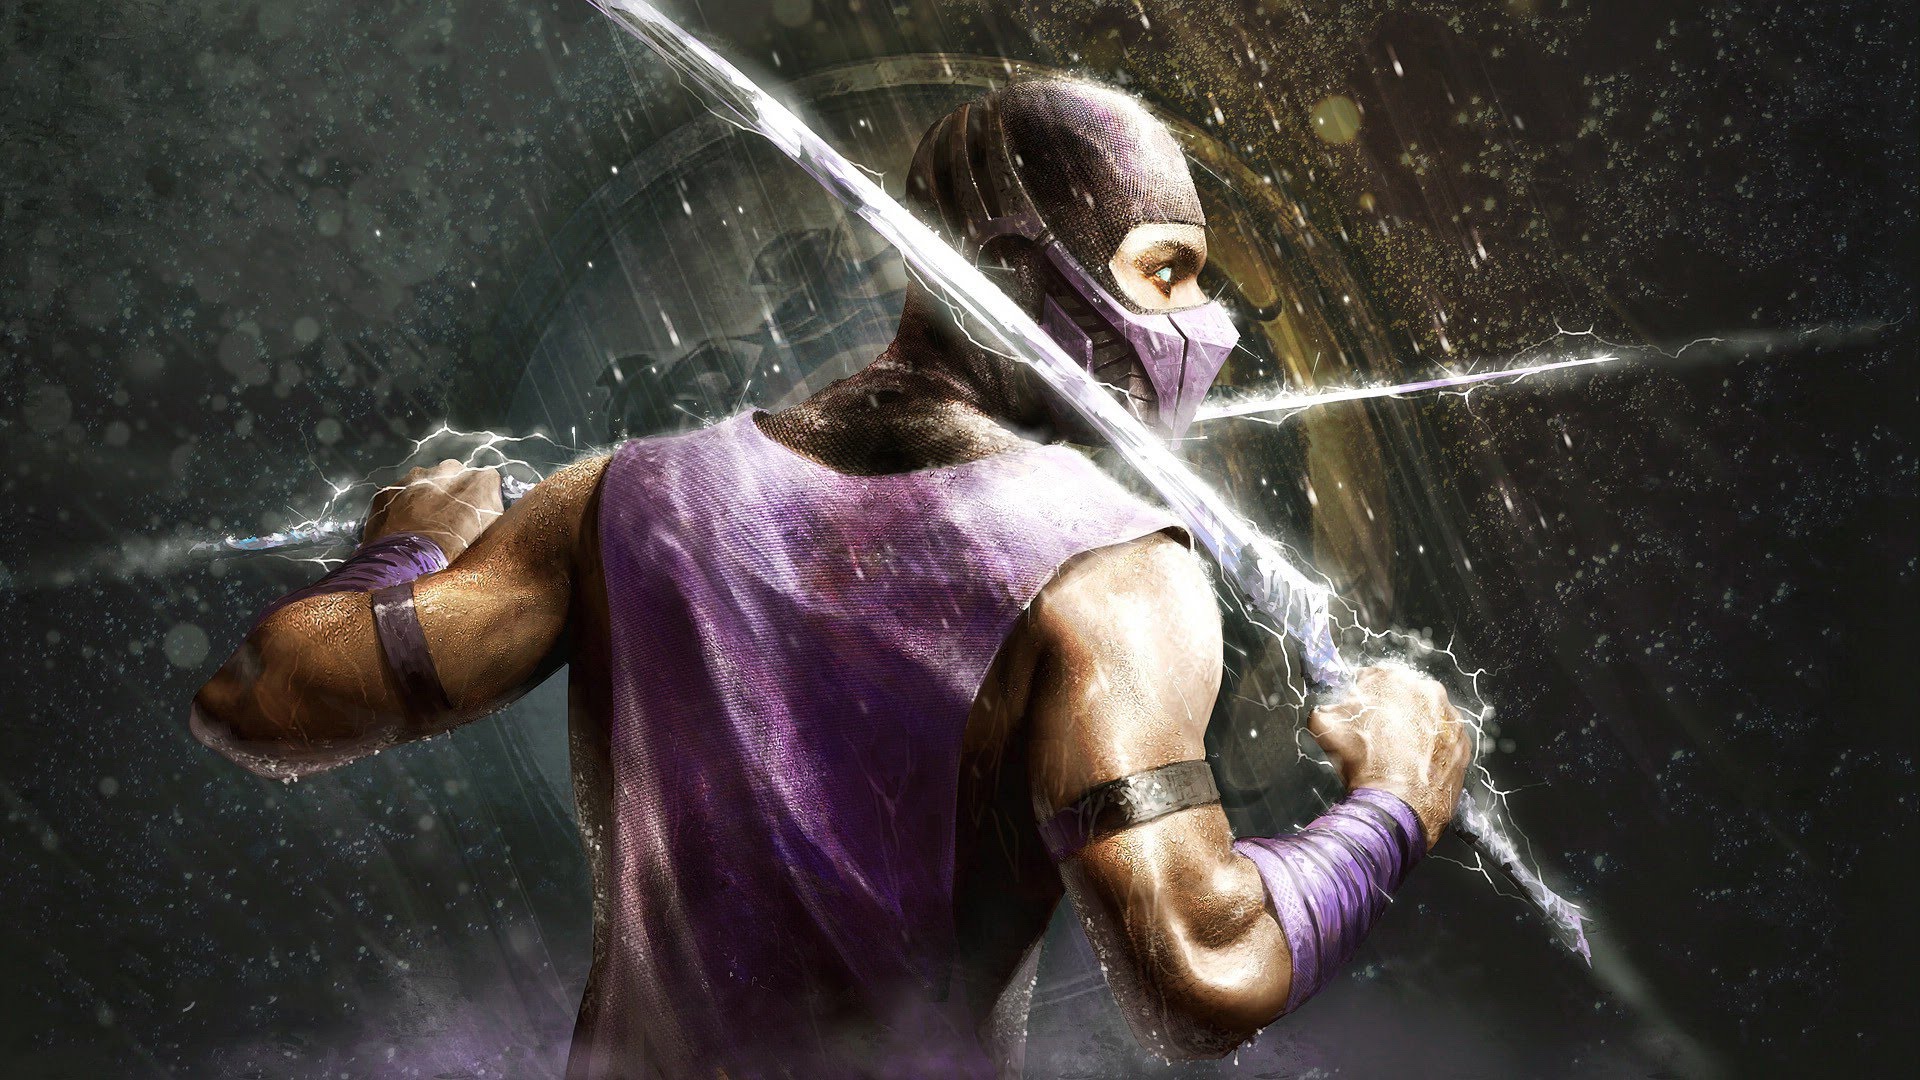 Mortal Kombat character Rain